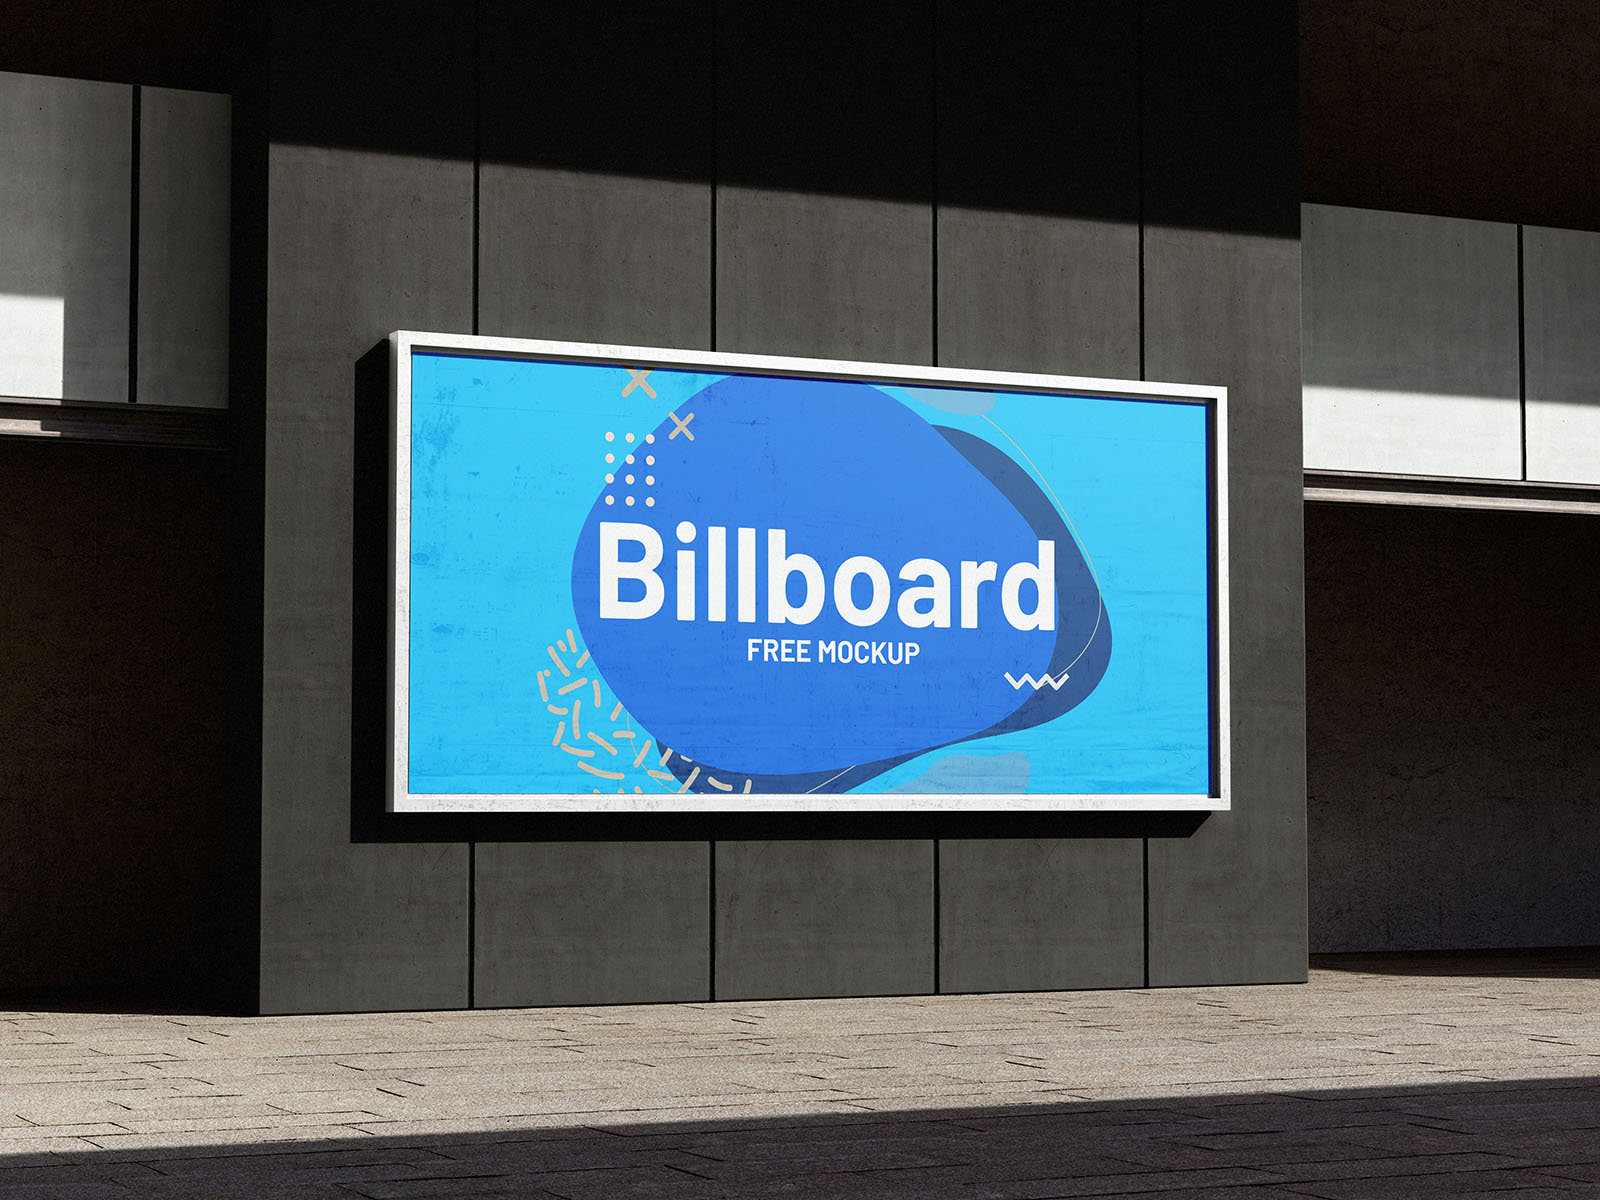 3 Views of Billboard Mockups in Street Environment FREE PSD